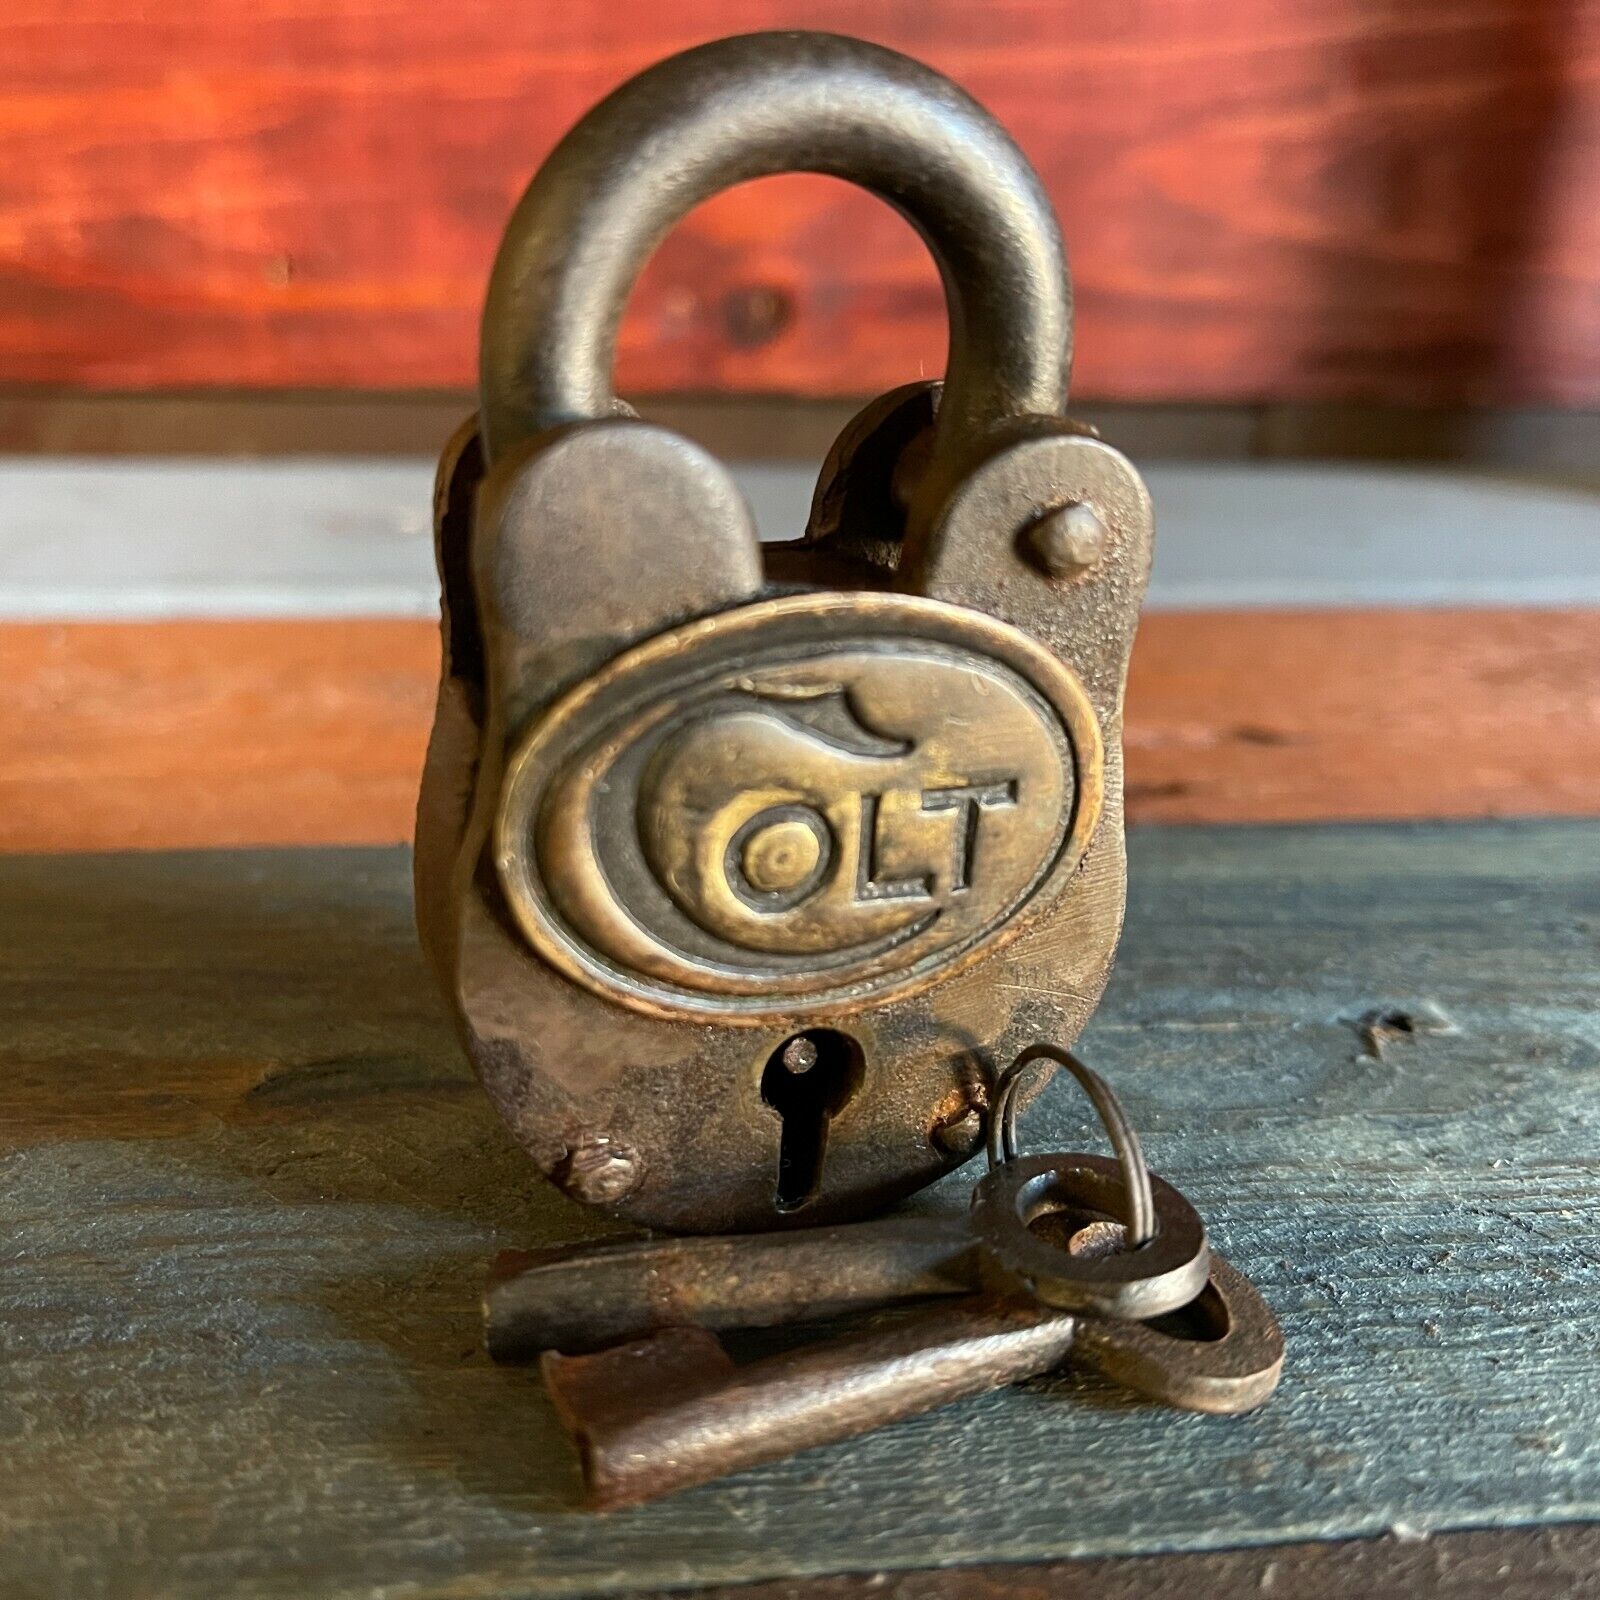 Colt Firearms Cast Iron Lock, Padlock, Brass Tag Colt Logo, Antique Finish